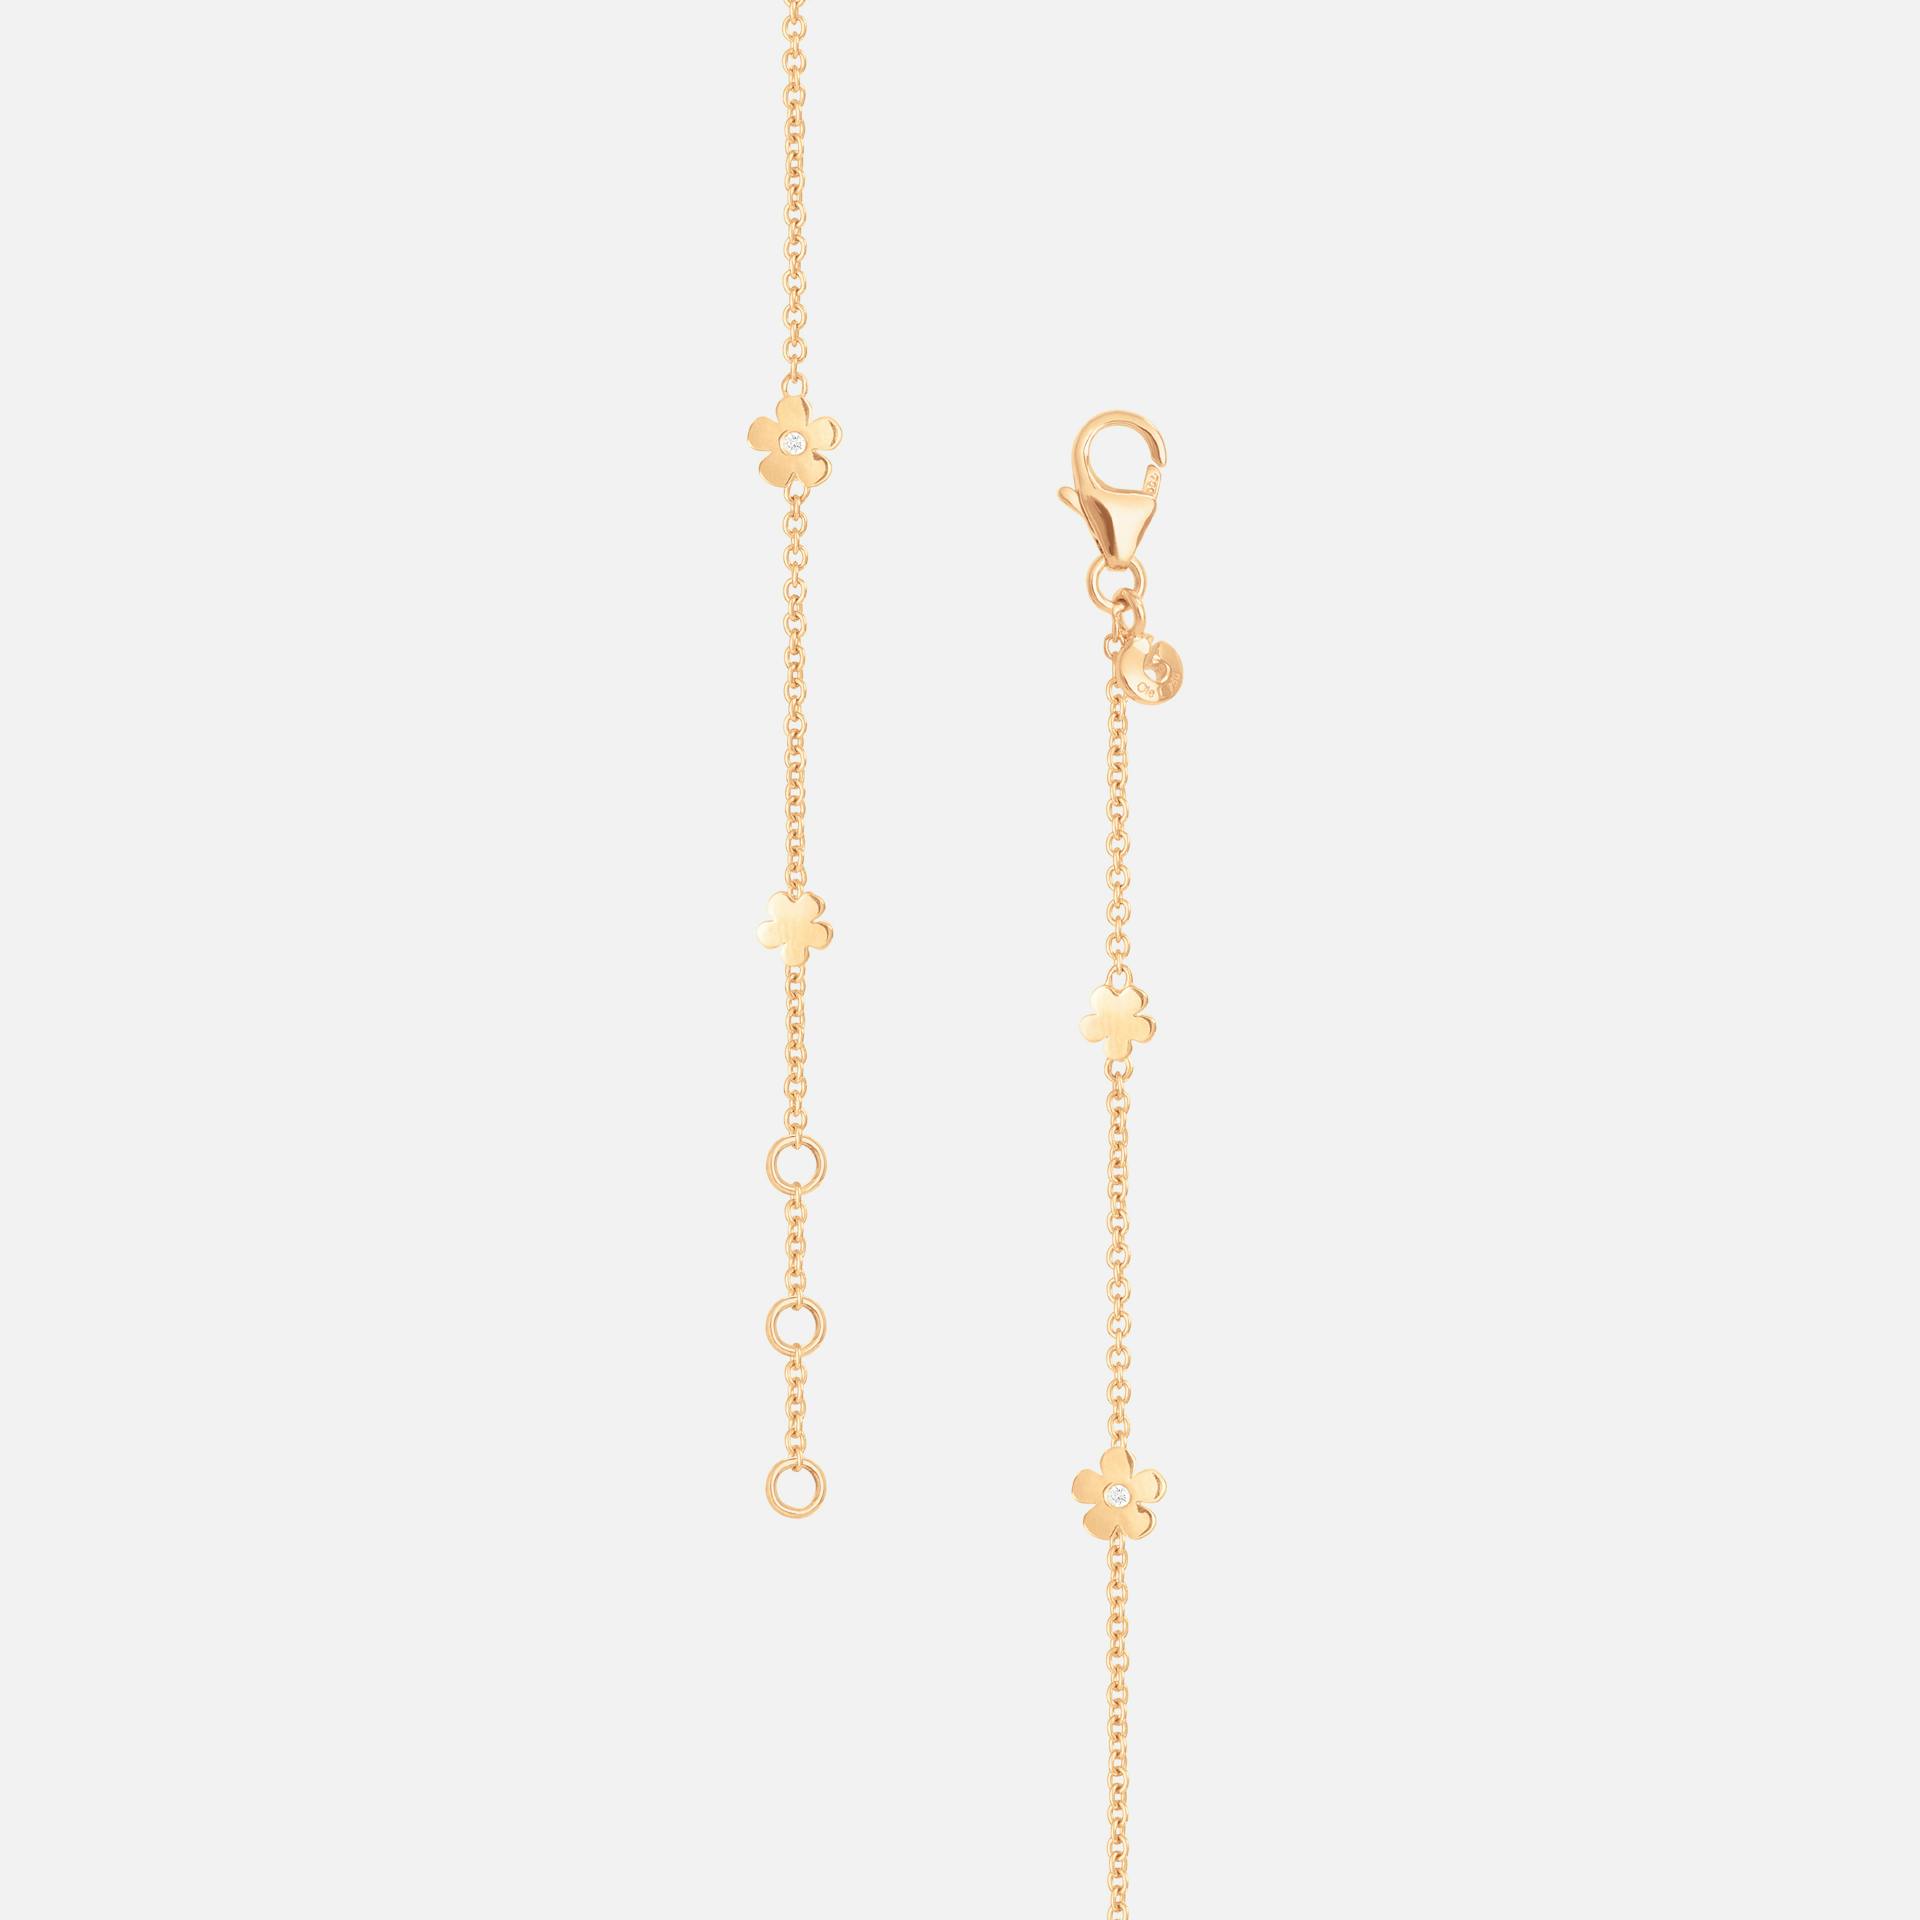 Lace guld armbånd, 18 cm med karabinlås | Ole Lynggaard Copenhagen